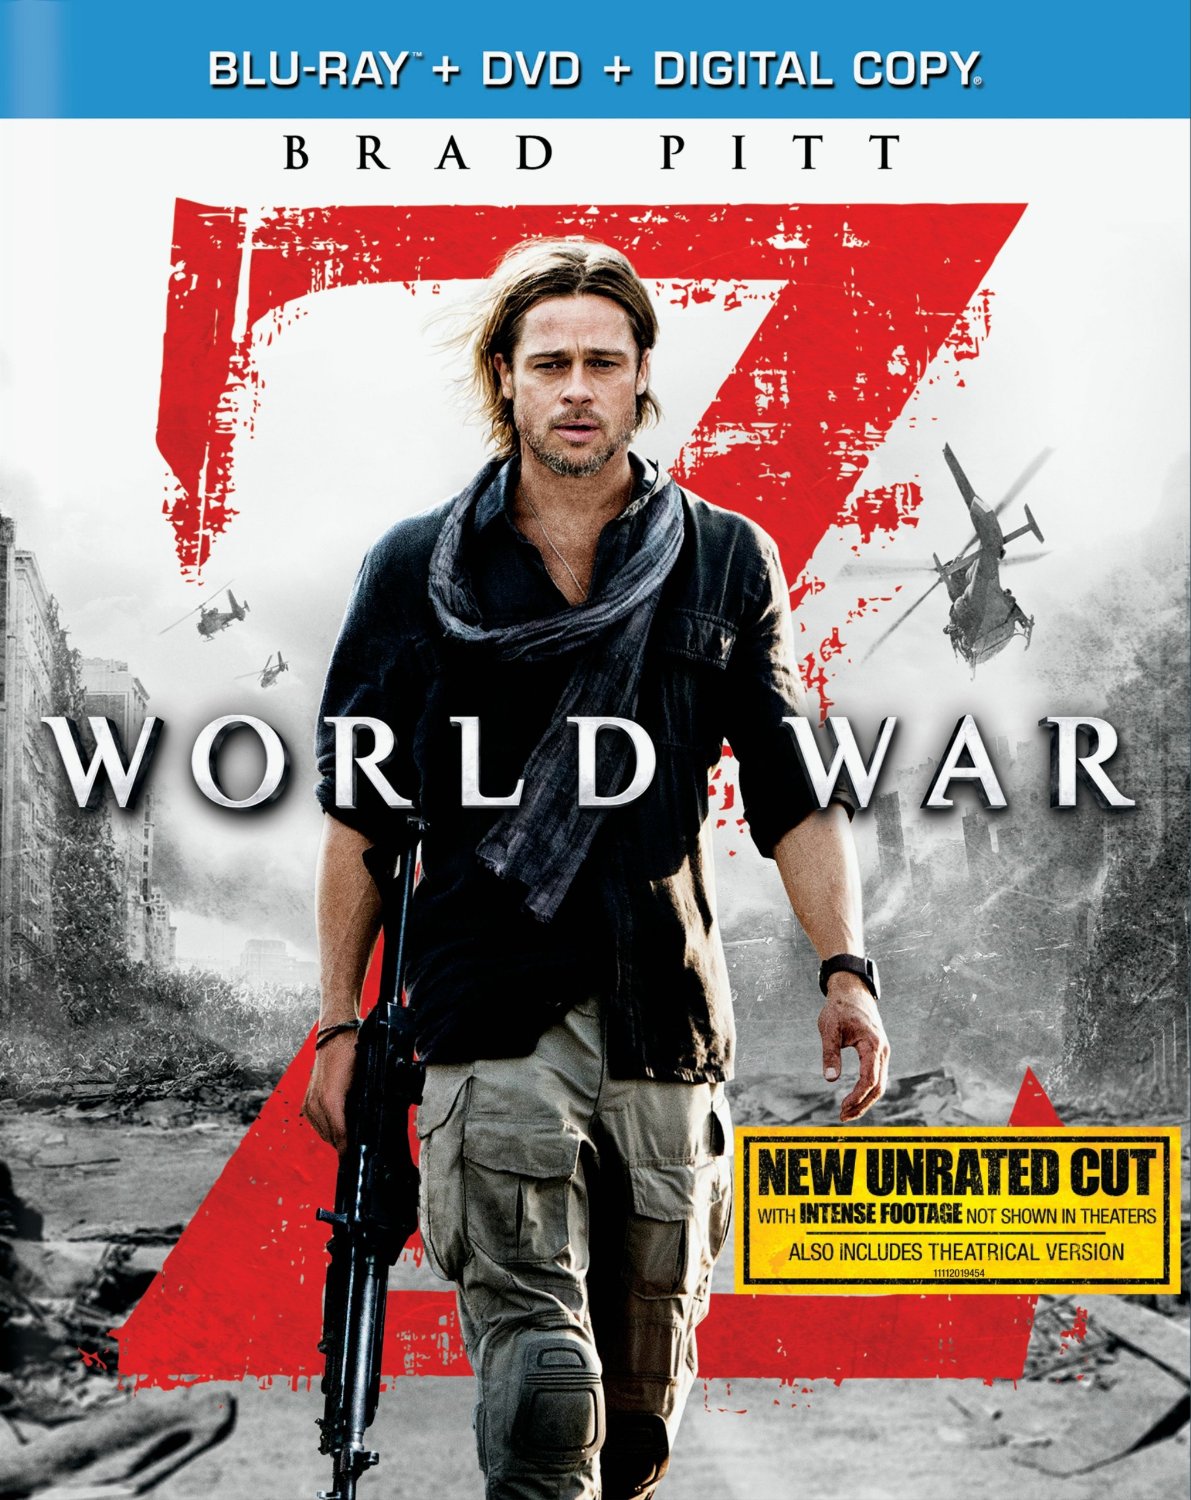 World War Z (Blu-ray + DVD + Digital Copy) Only $7.99 Shipped – 80% Savings